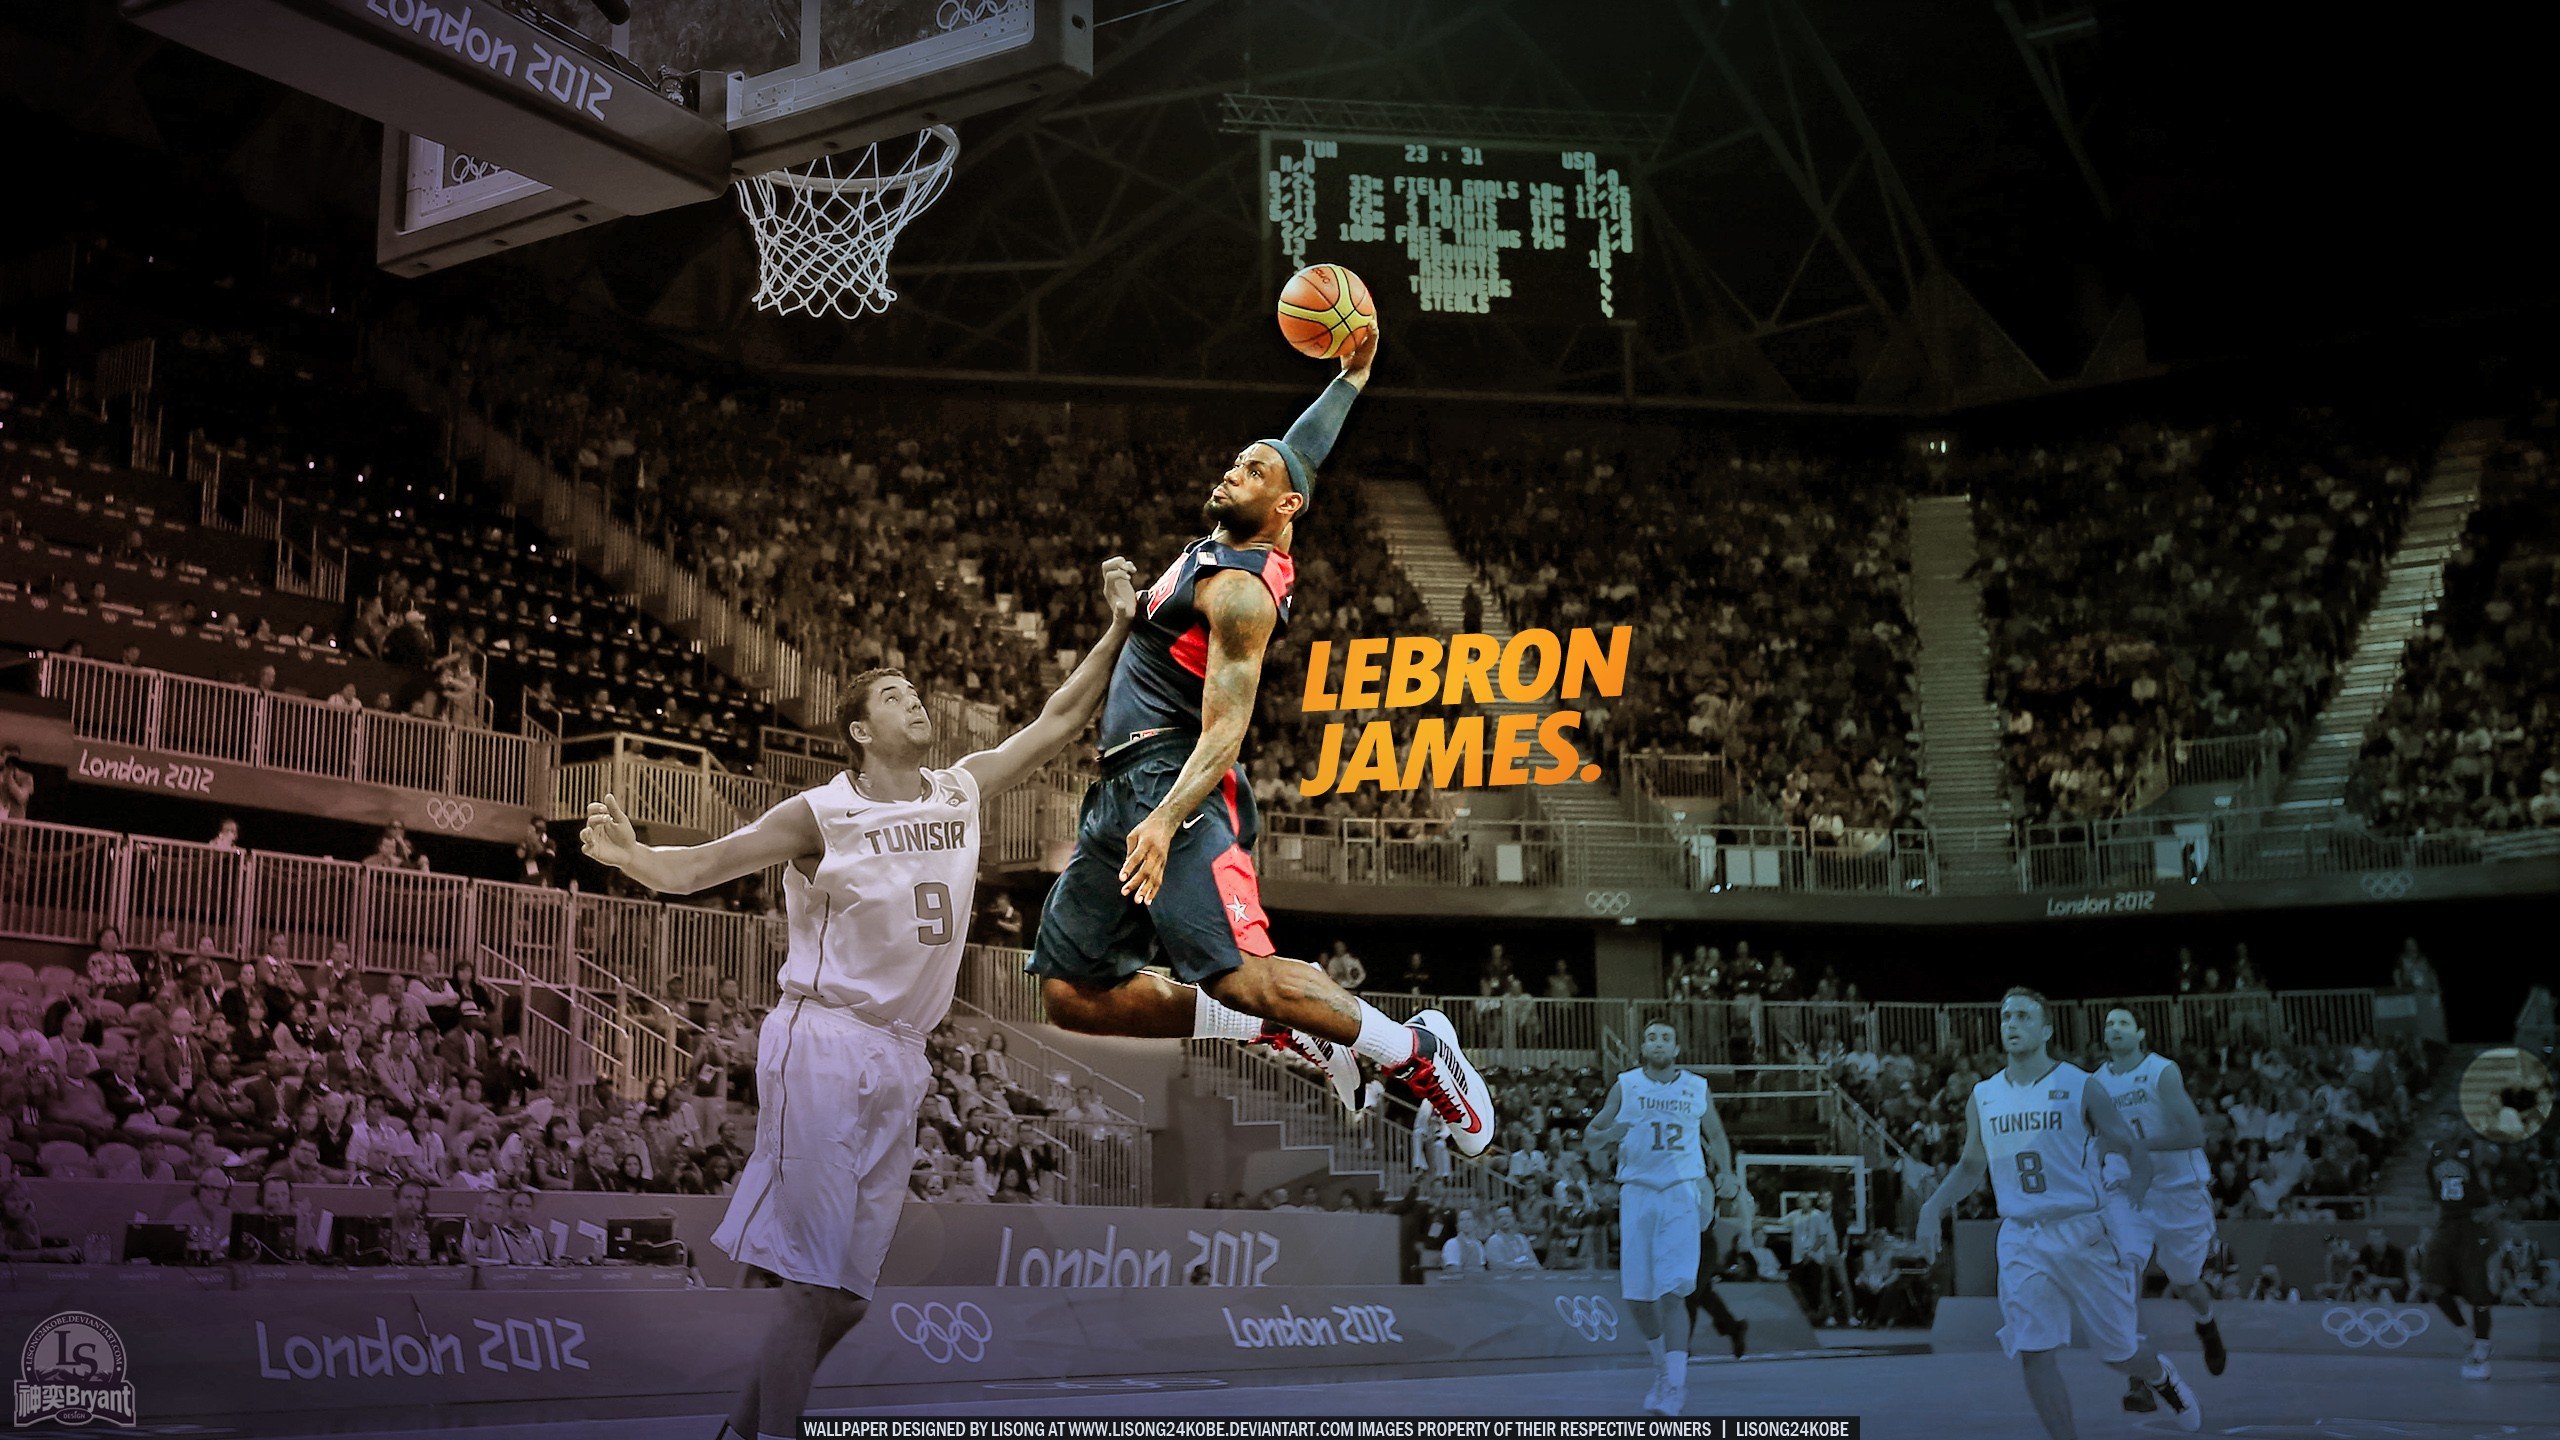 NBA Lebron James dunk basketball player wallpaper 2560x1440 259456